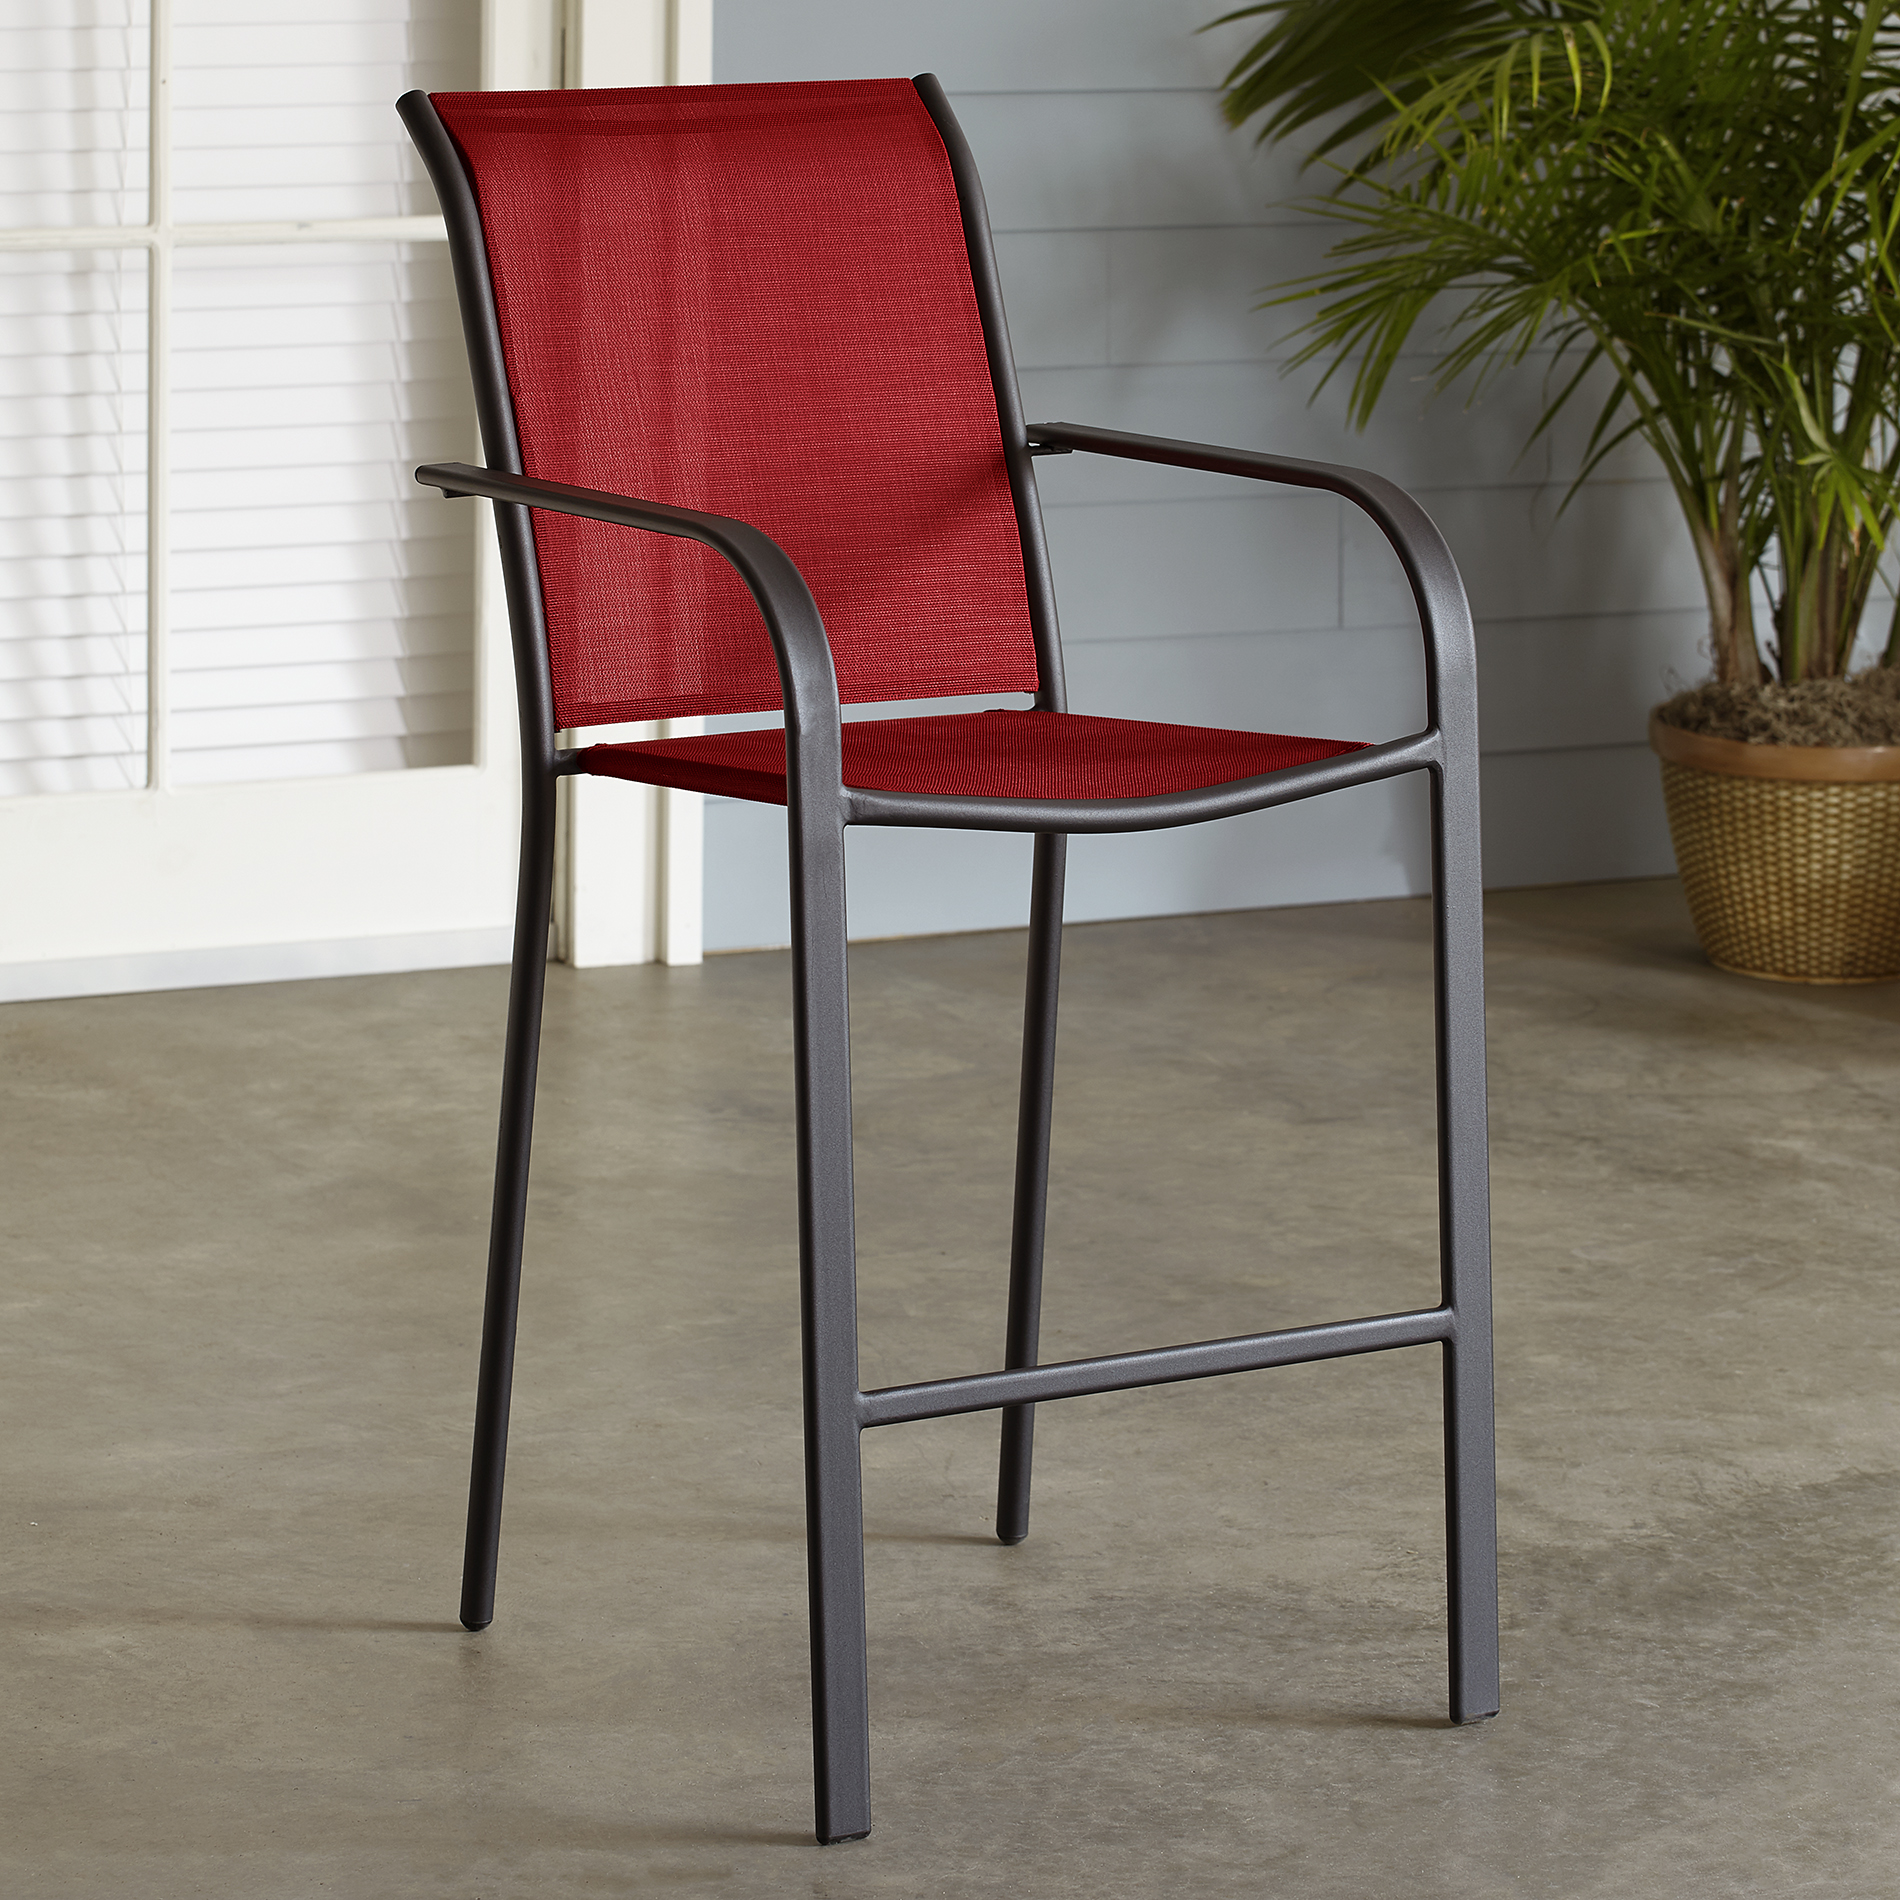 essential garden bartlett split sling stack bar chair - red